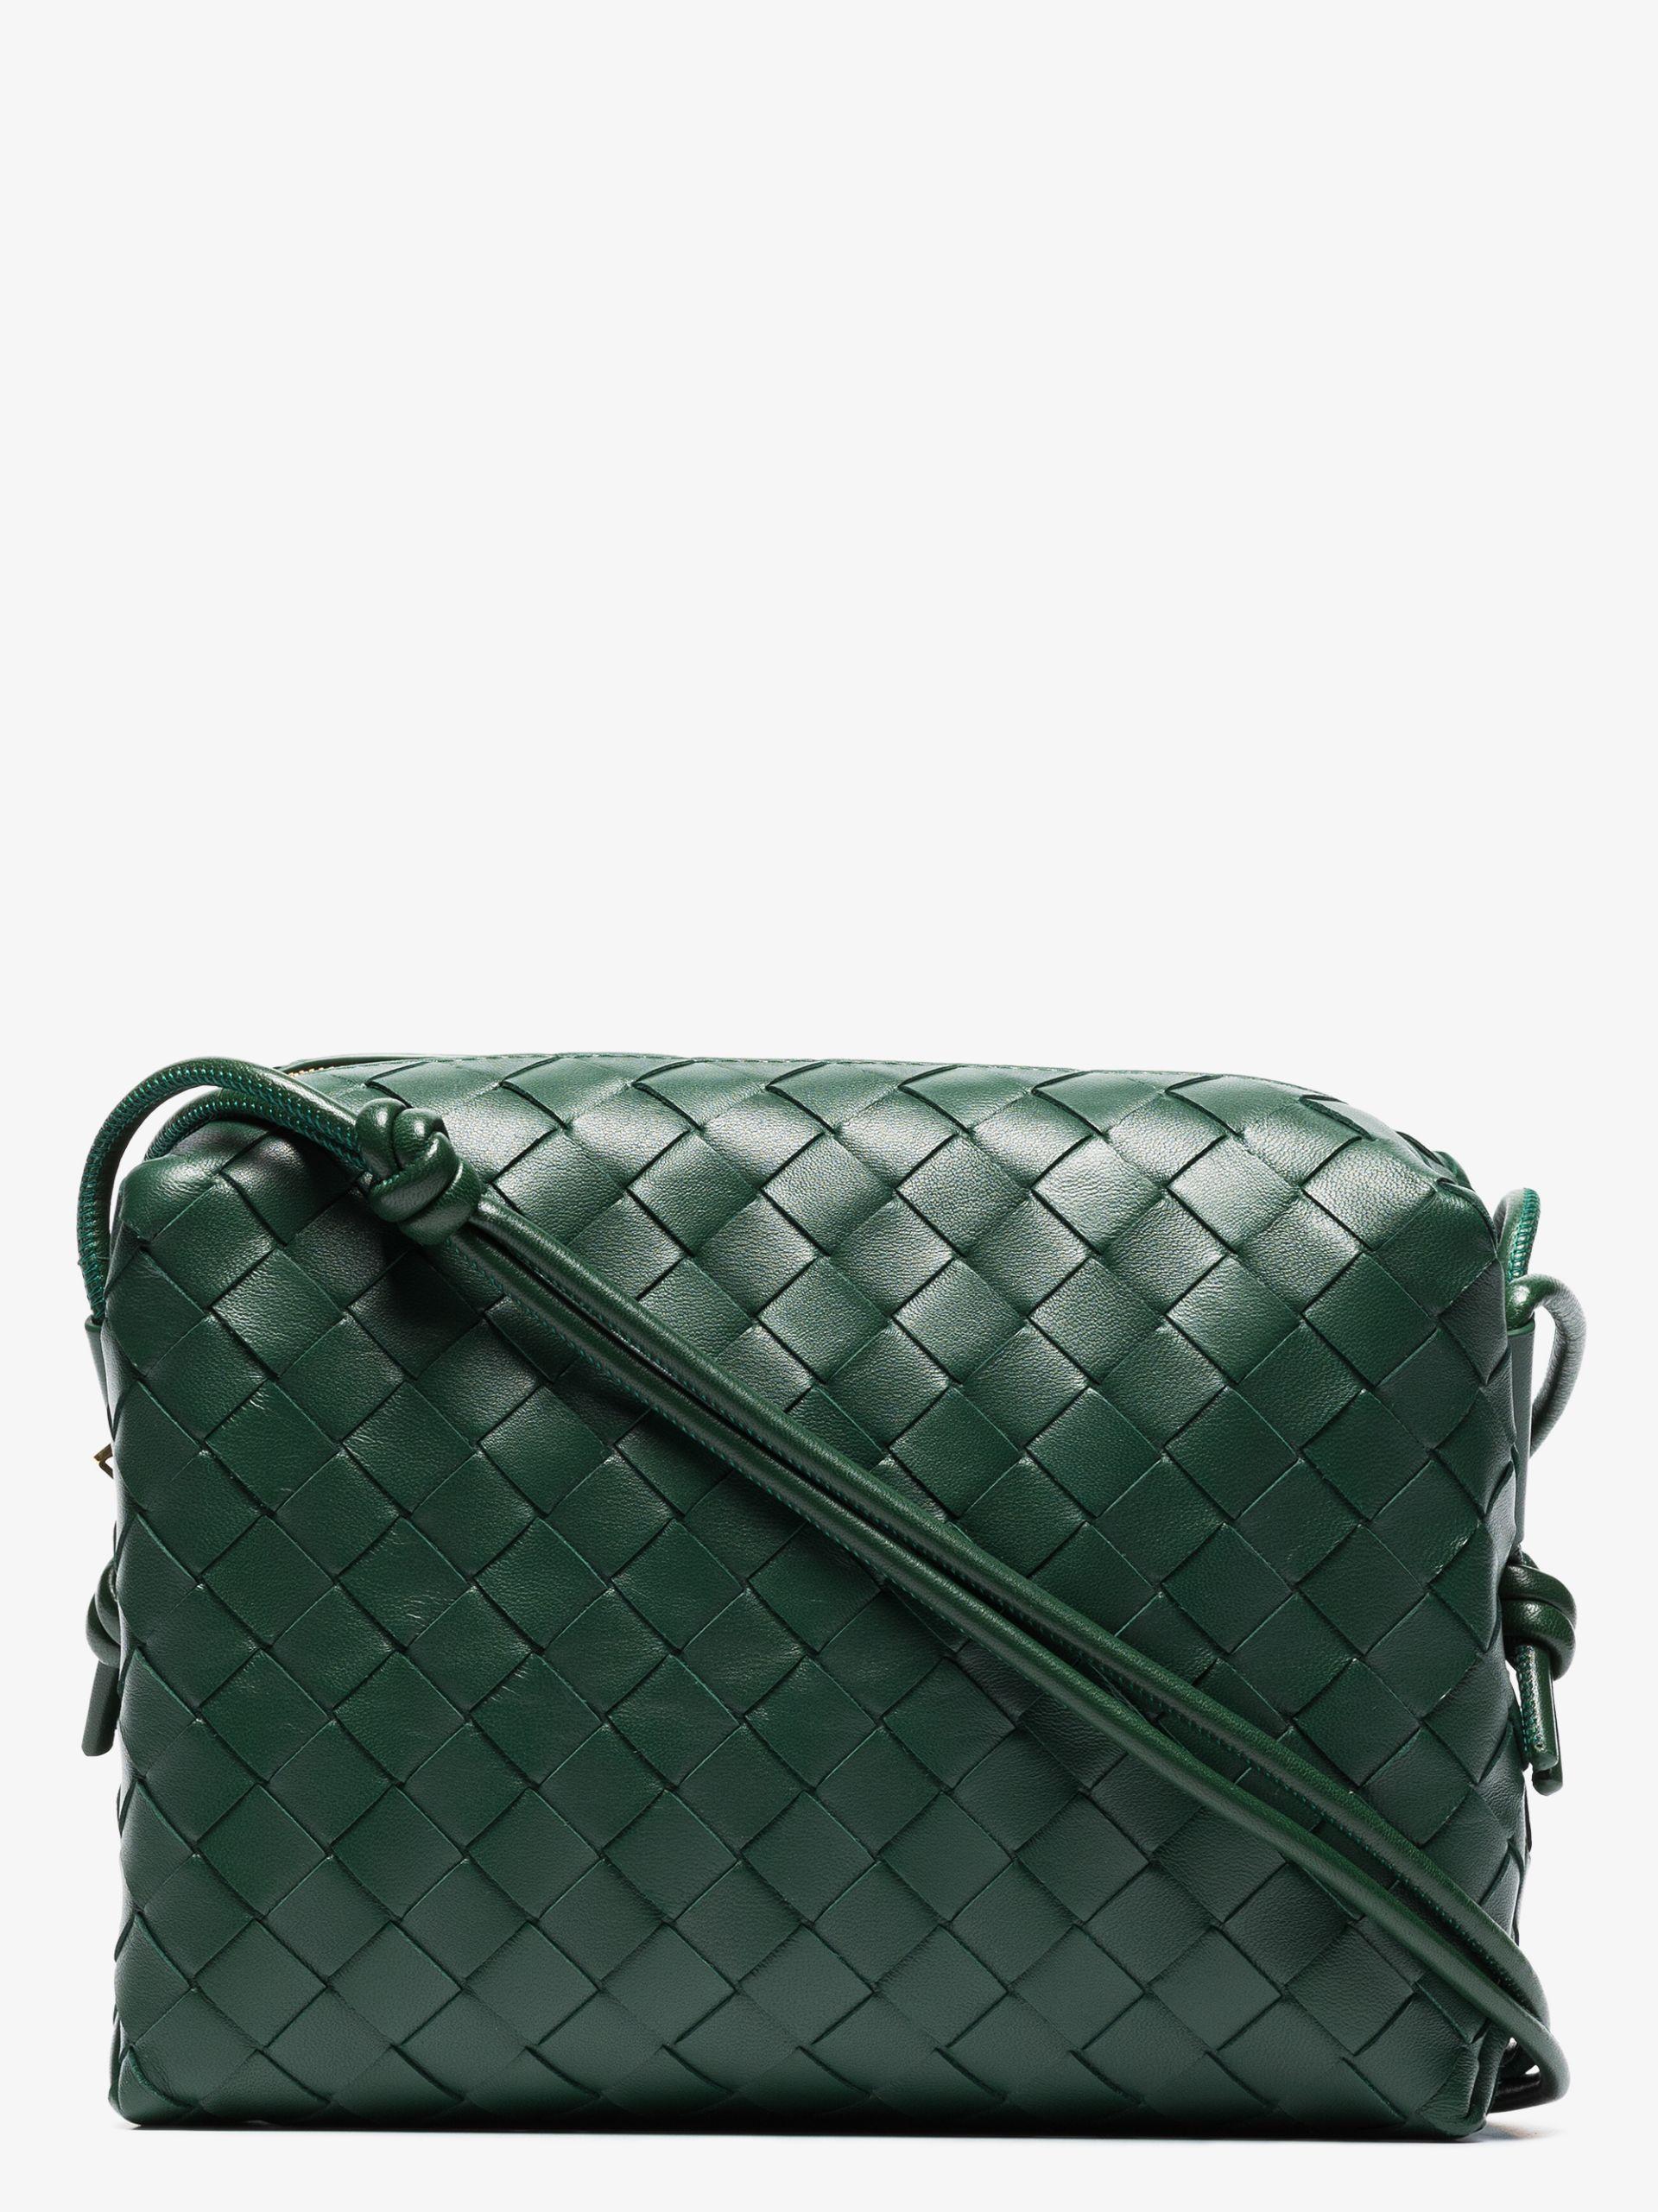 Bottega Veneta 'Loop Mini' Shoulder Bag - Green - ShopStyle